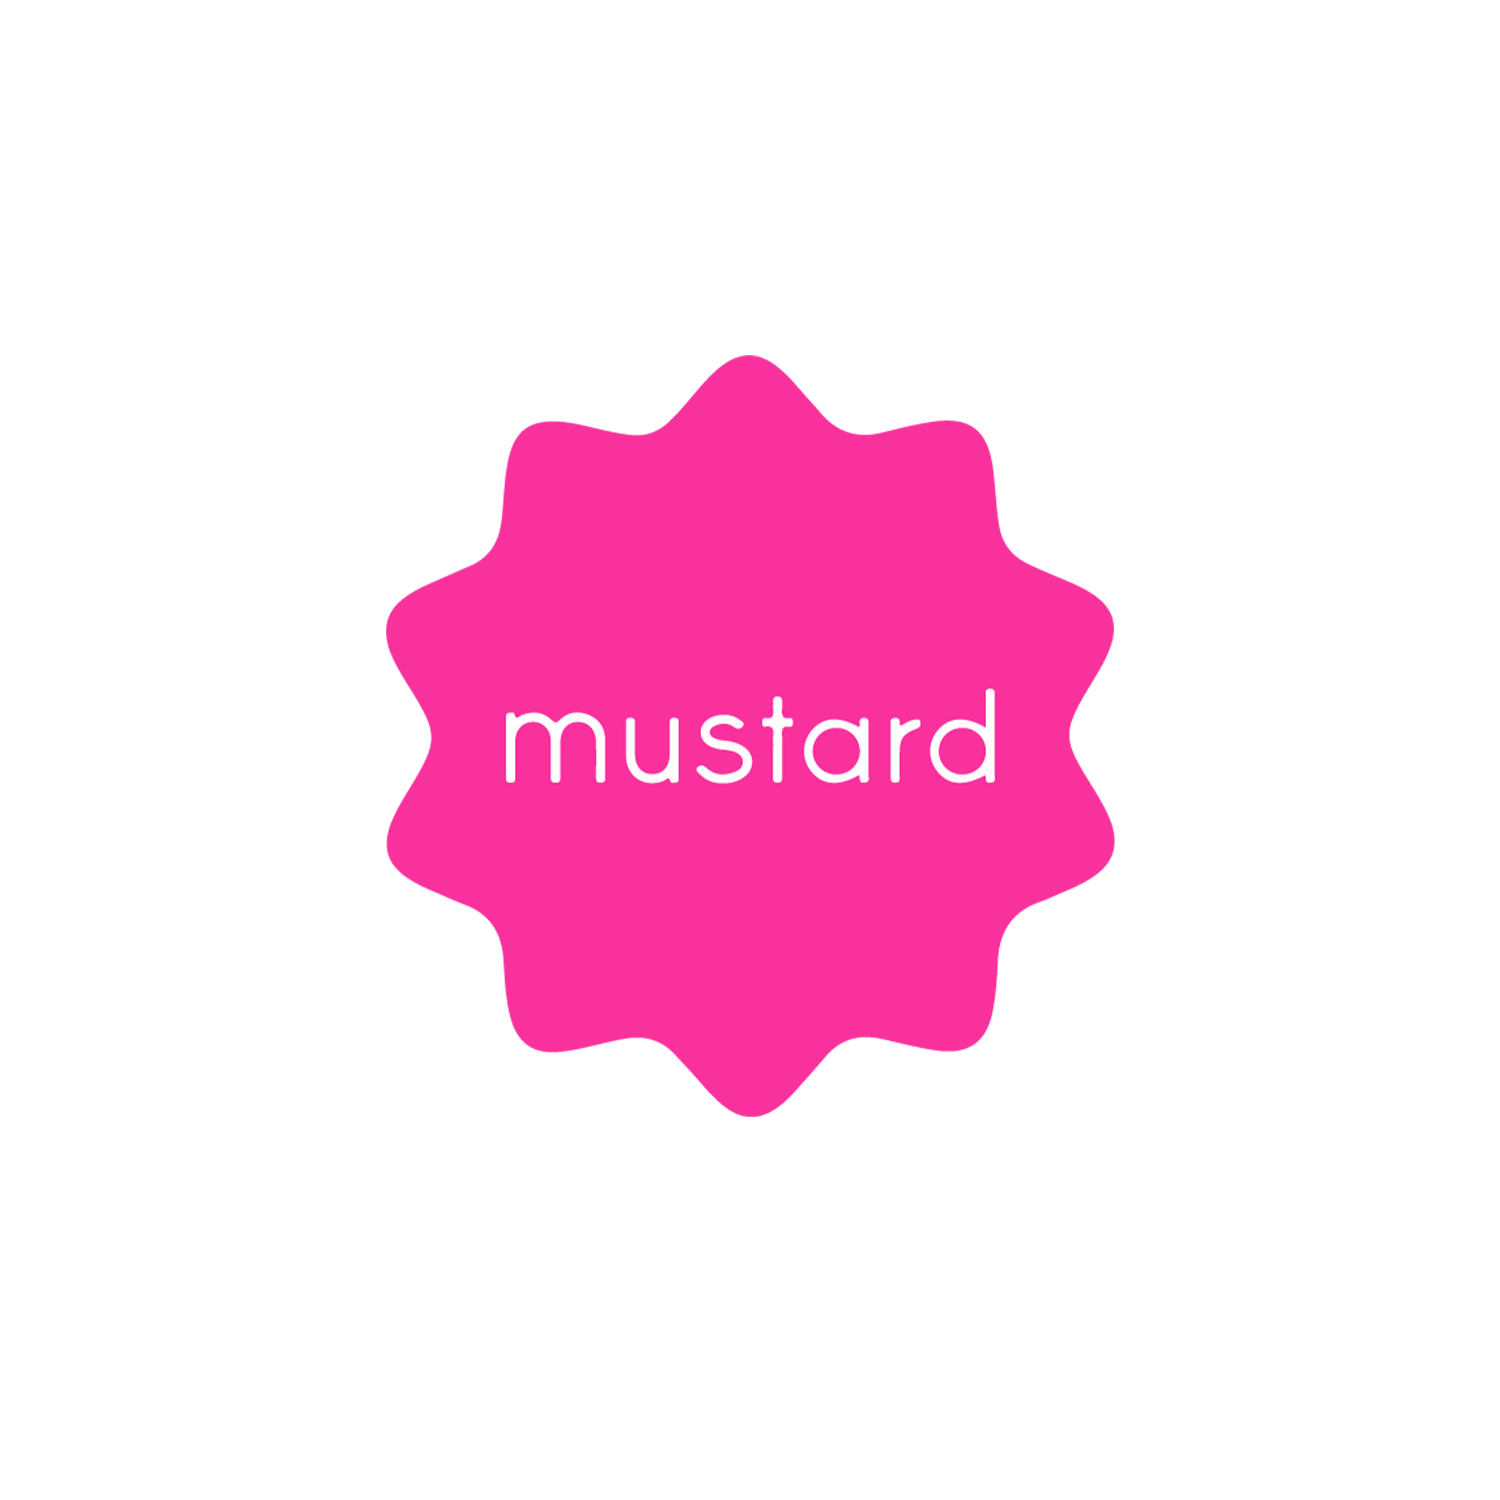 mustard 1-1.png